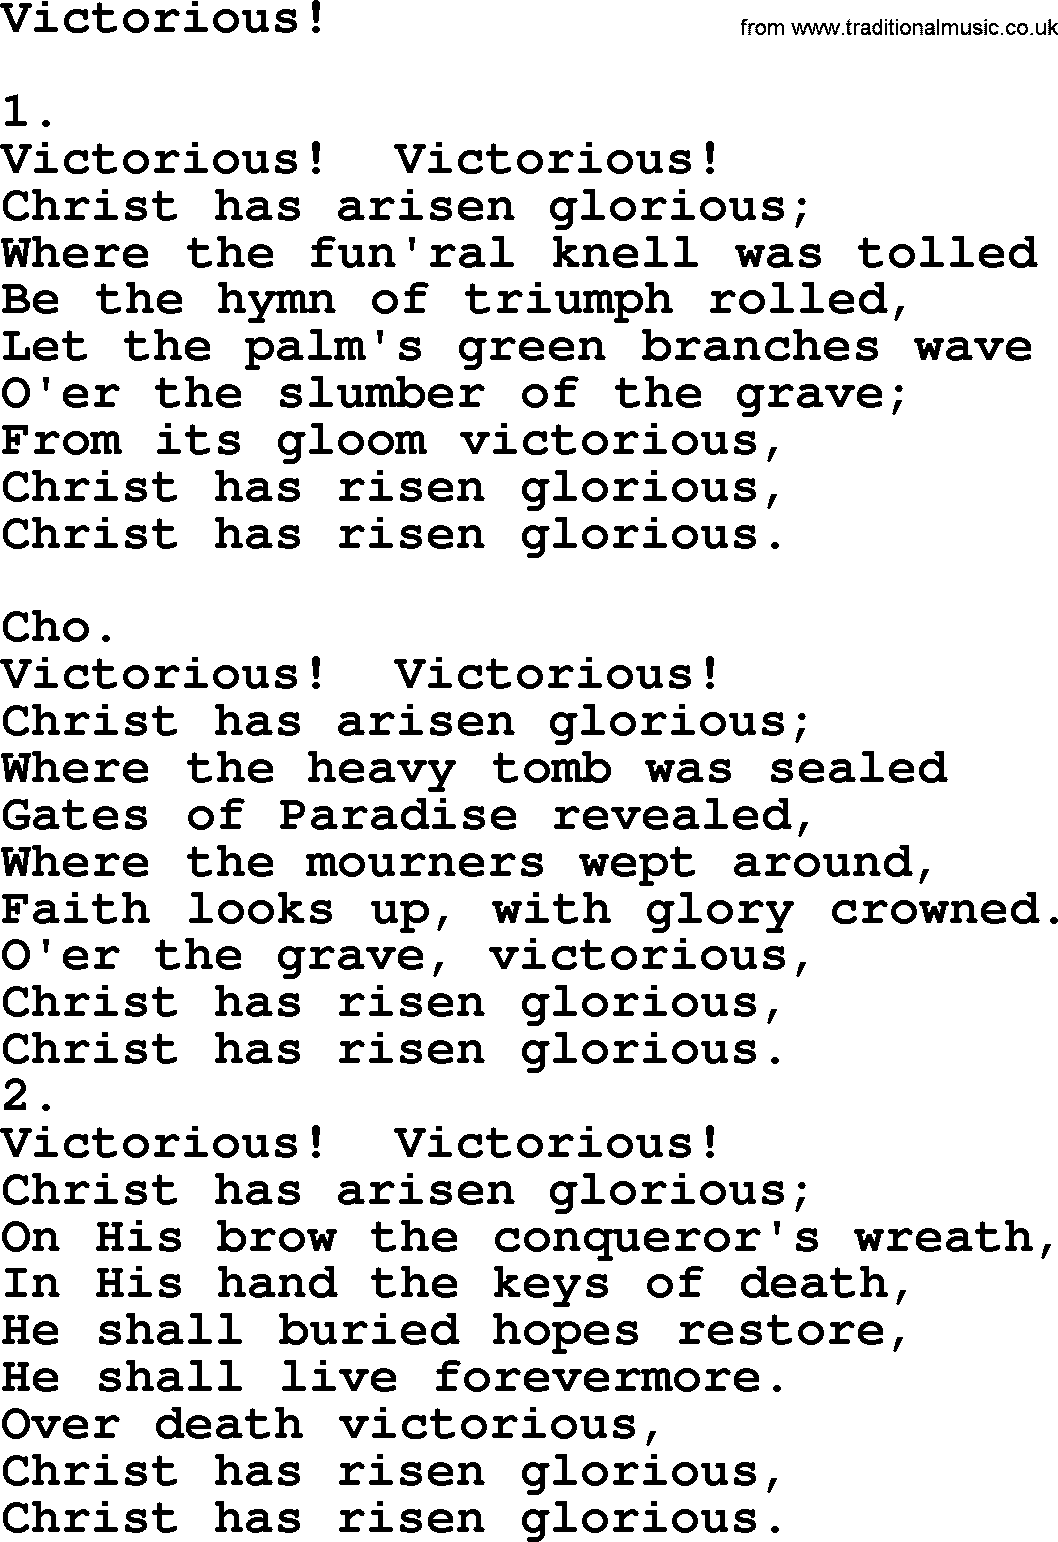 Apostolic & Pentecostal Hymns and Songs, Hymn: Victorious! lyrics and PDF